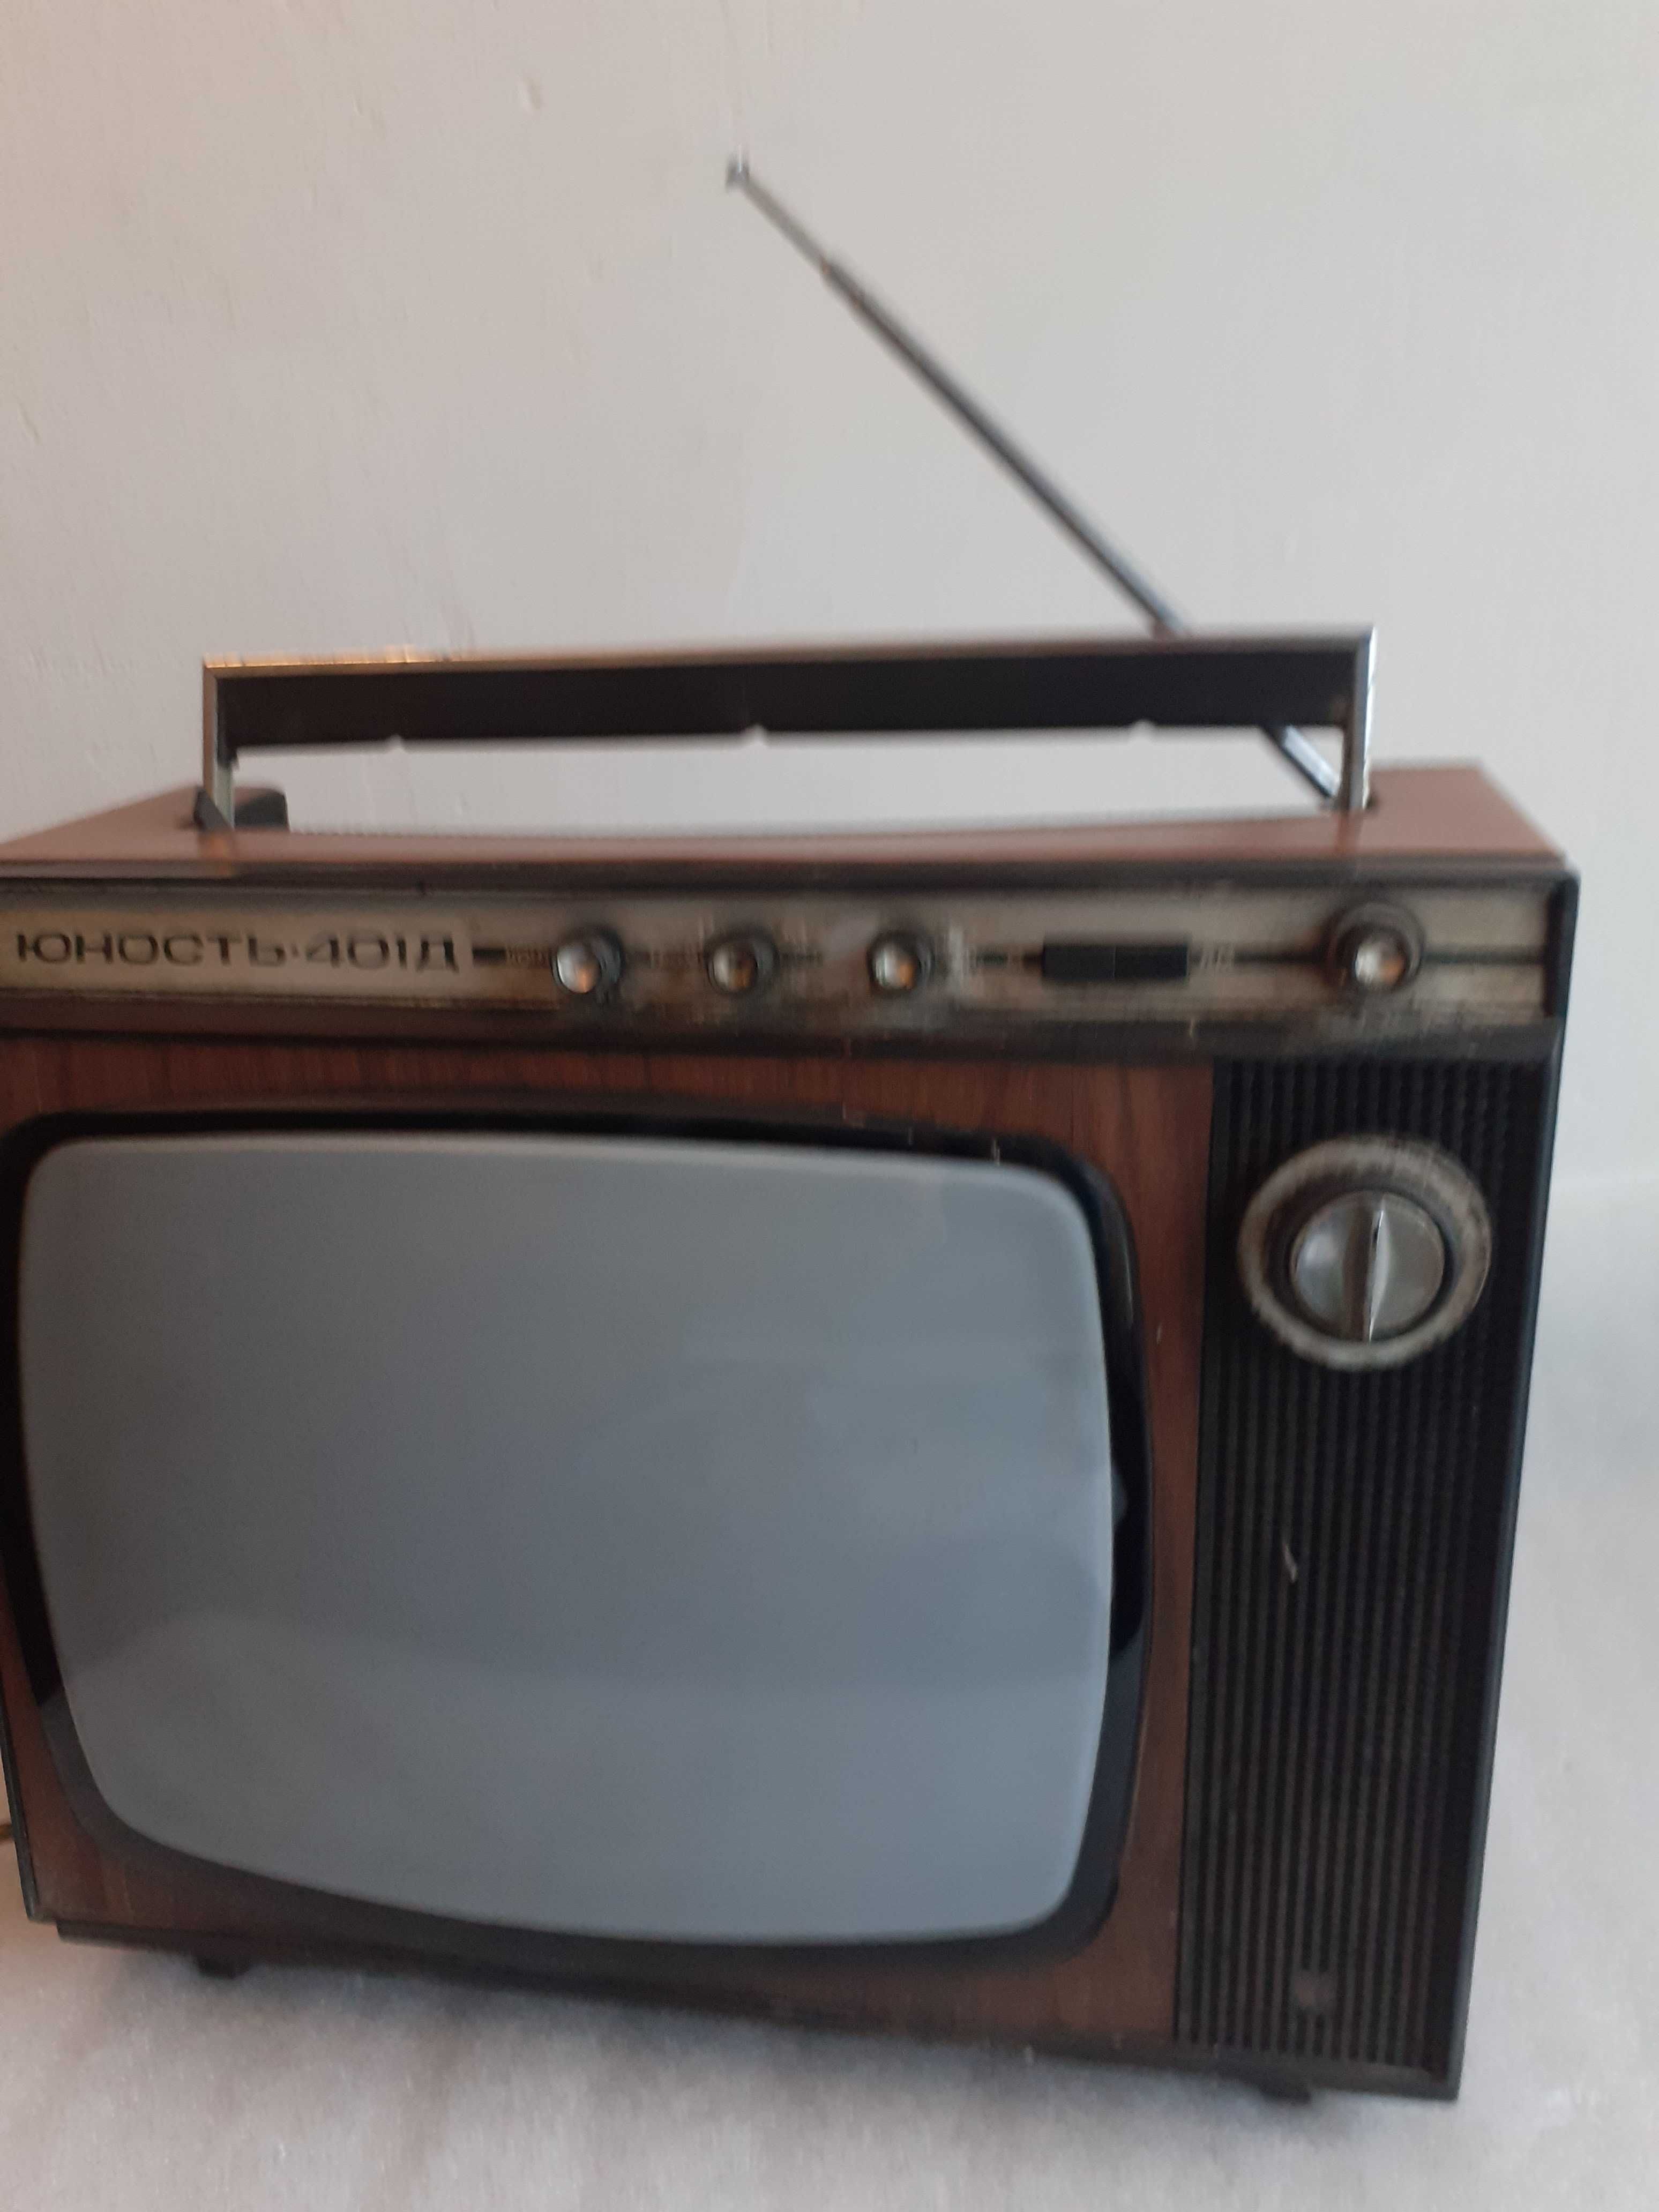 Junost 401 D radziecki telewizor retro